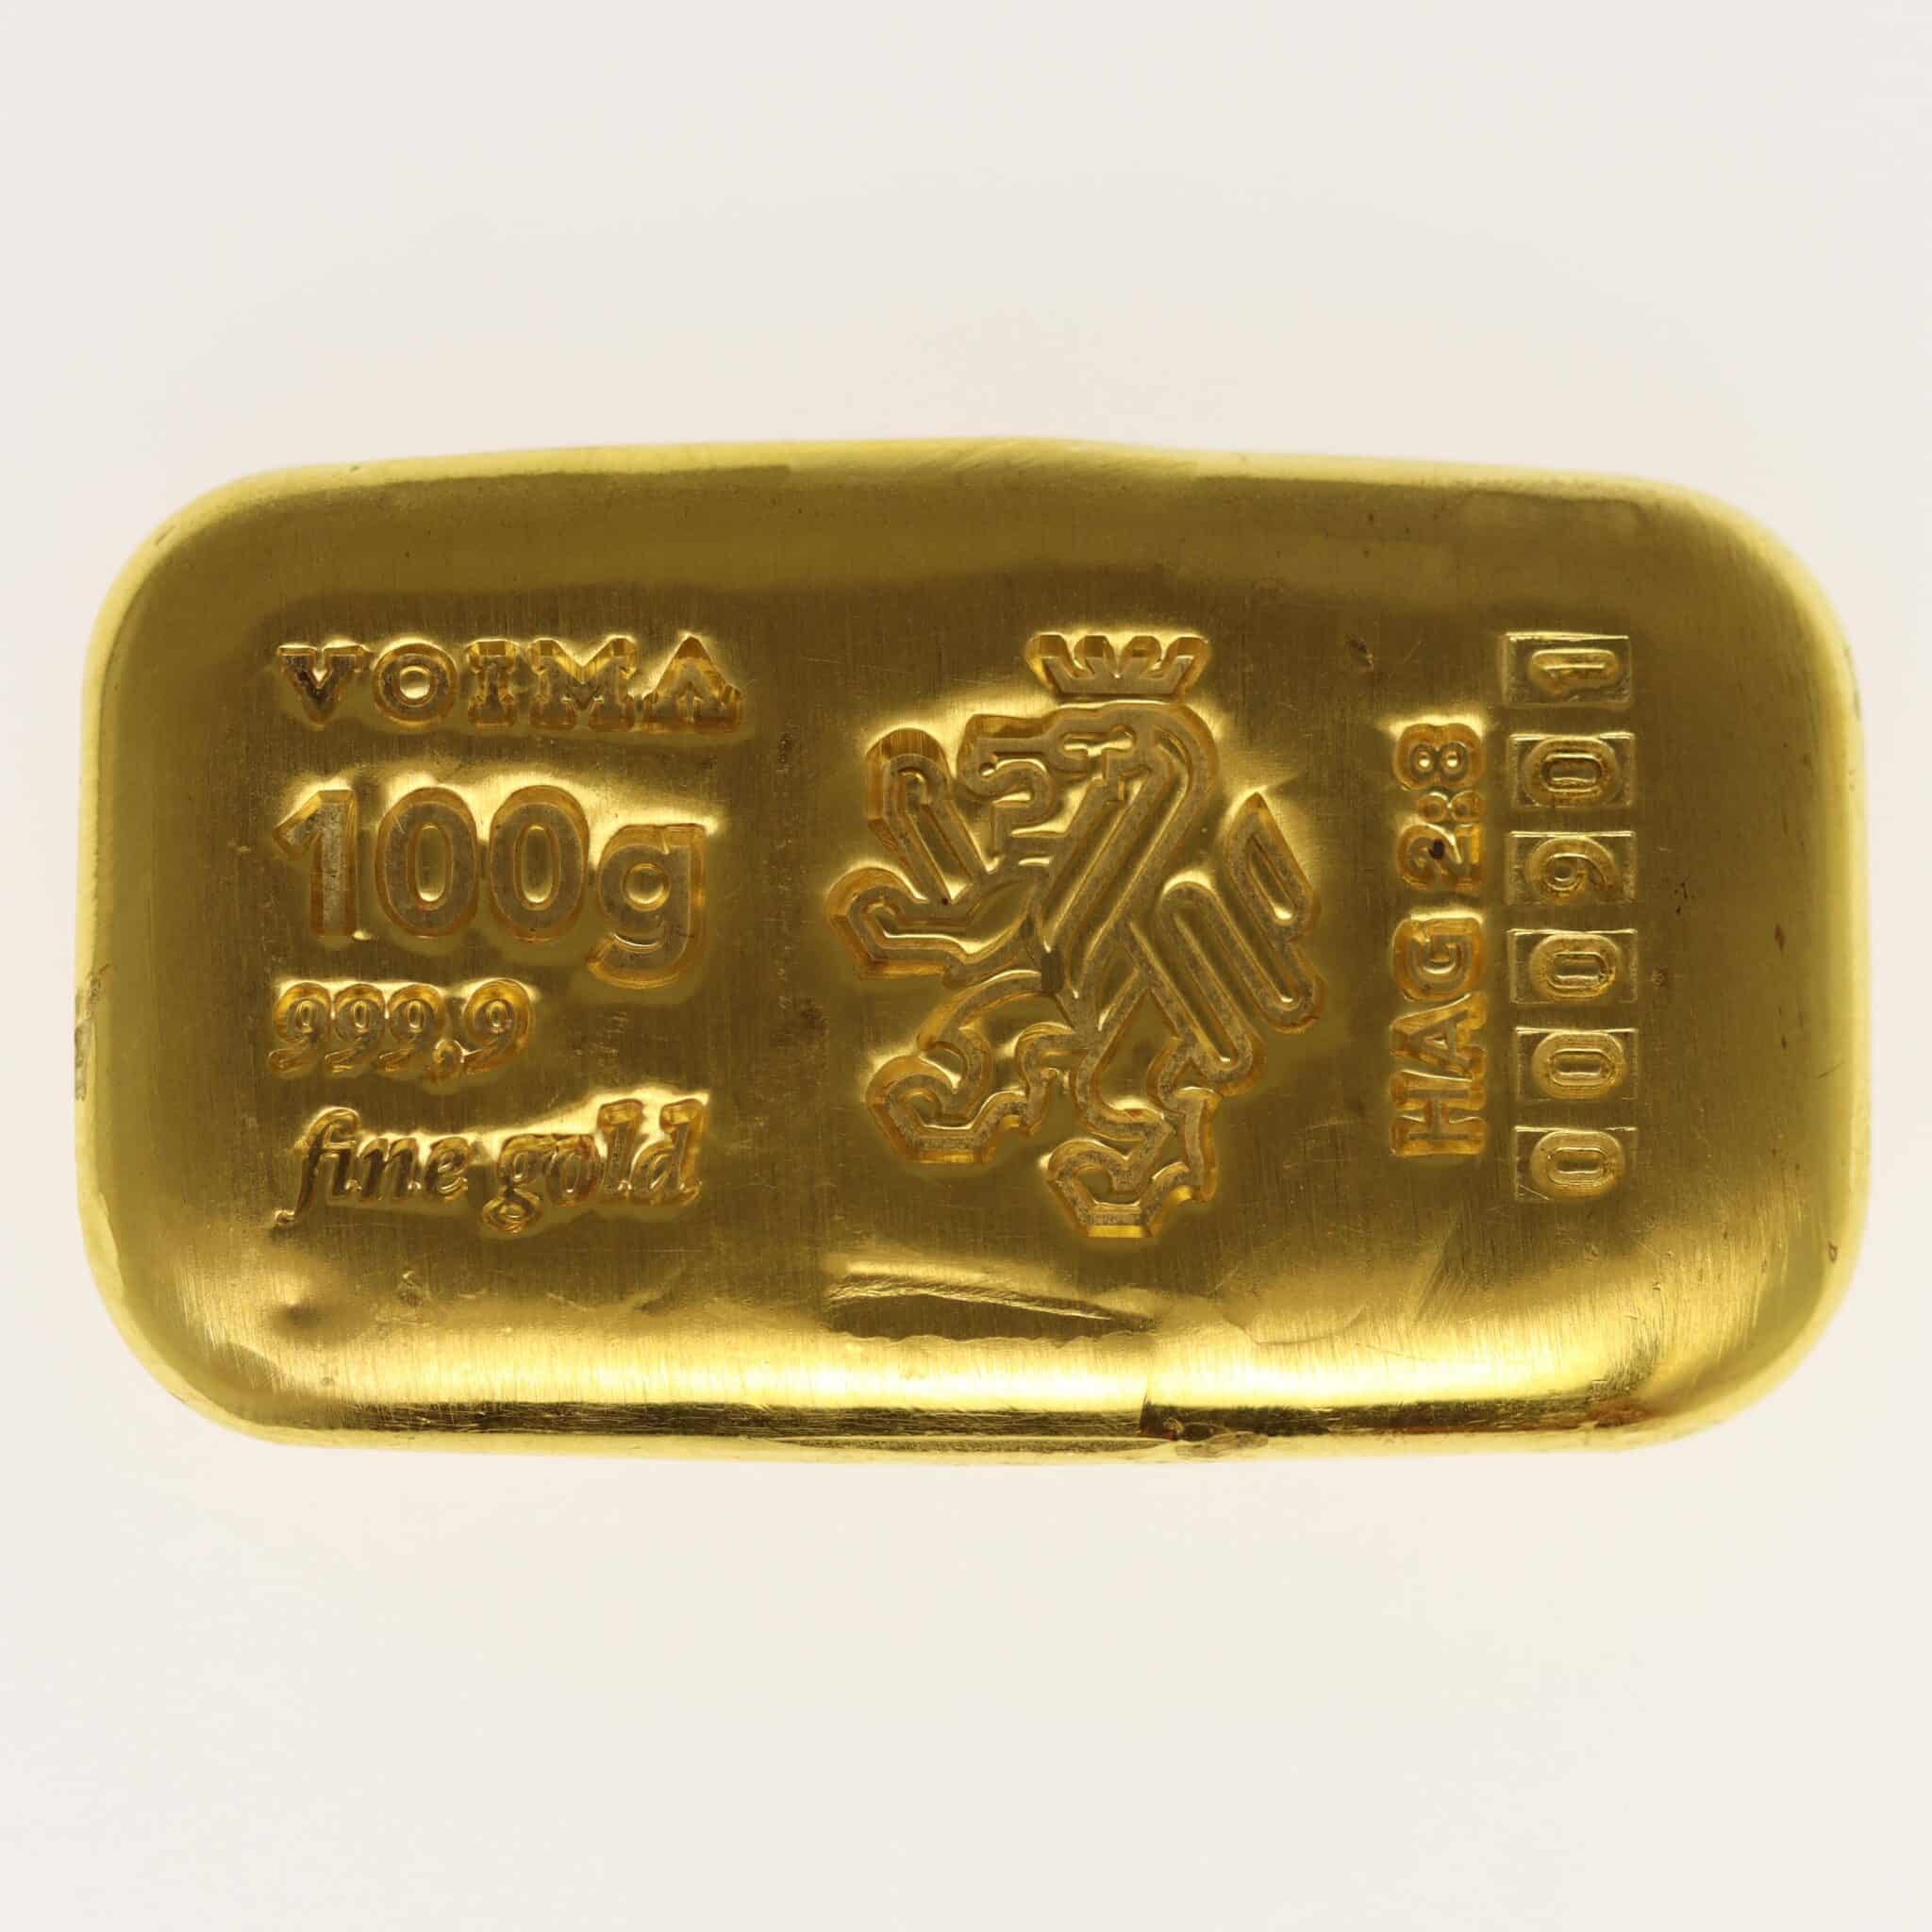 goldbarren - Goldbarren 100 Gramm VOIMA